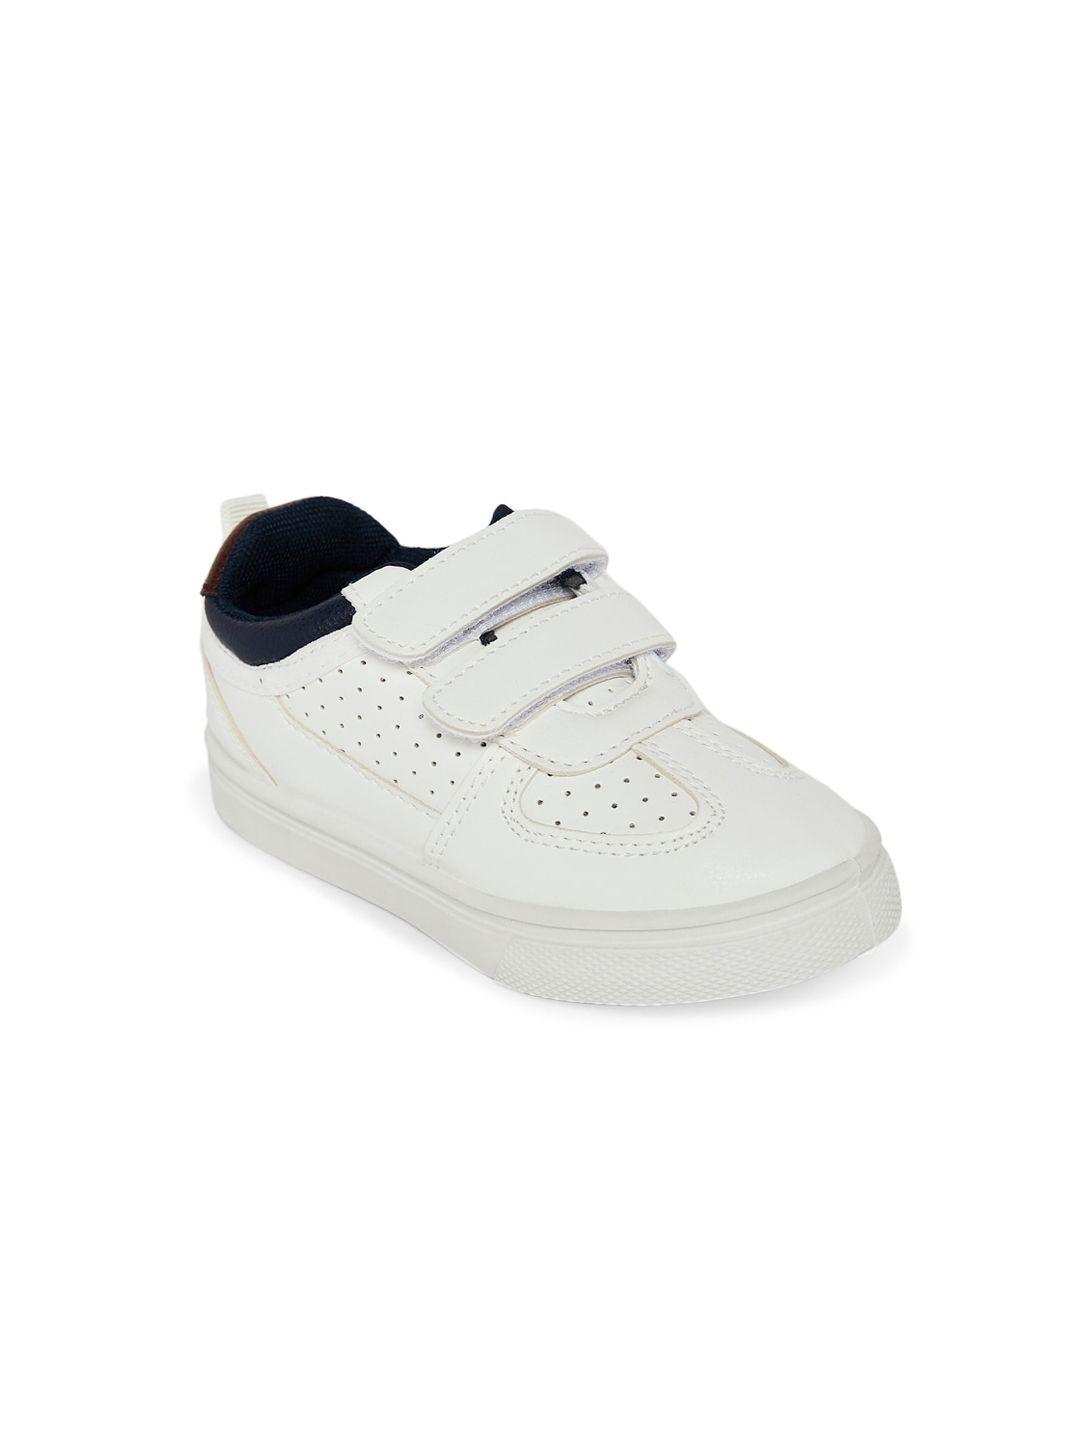 pantaloons junior boys white perforations pu sneakers